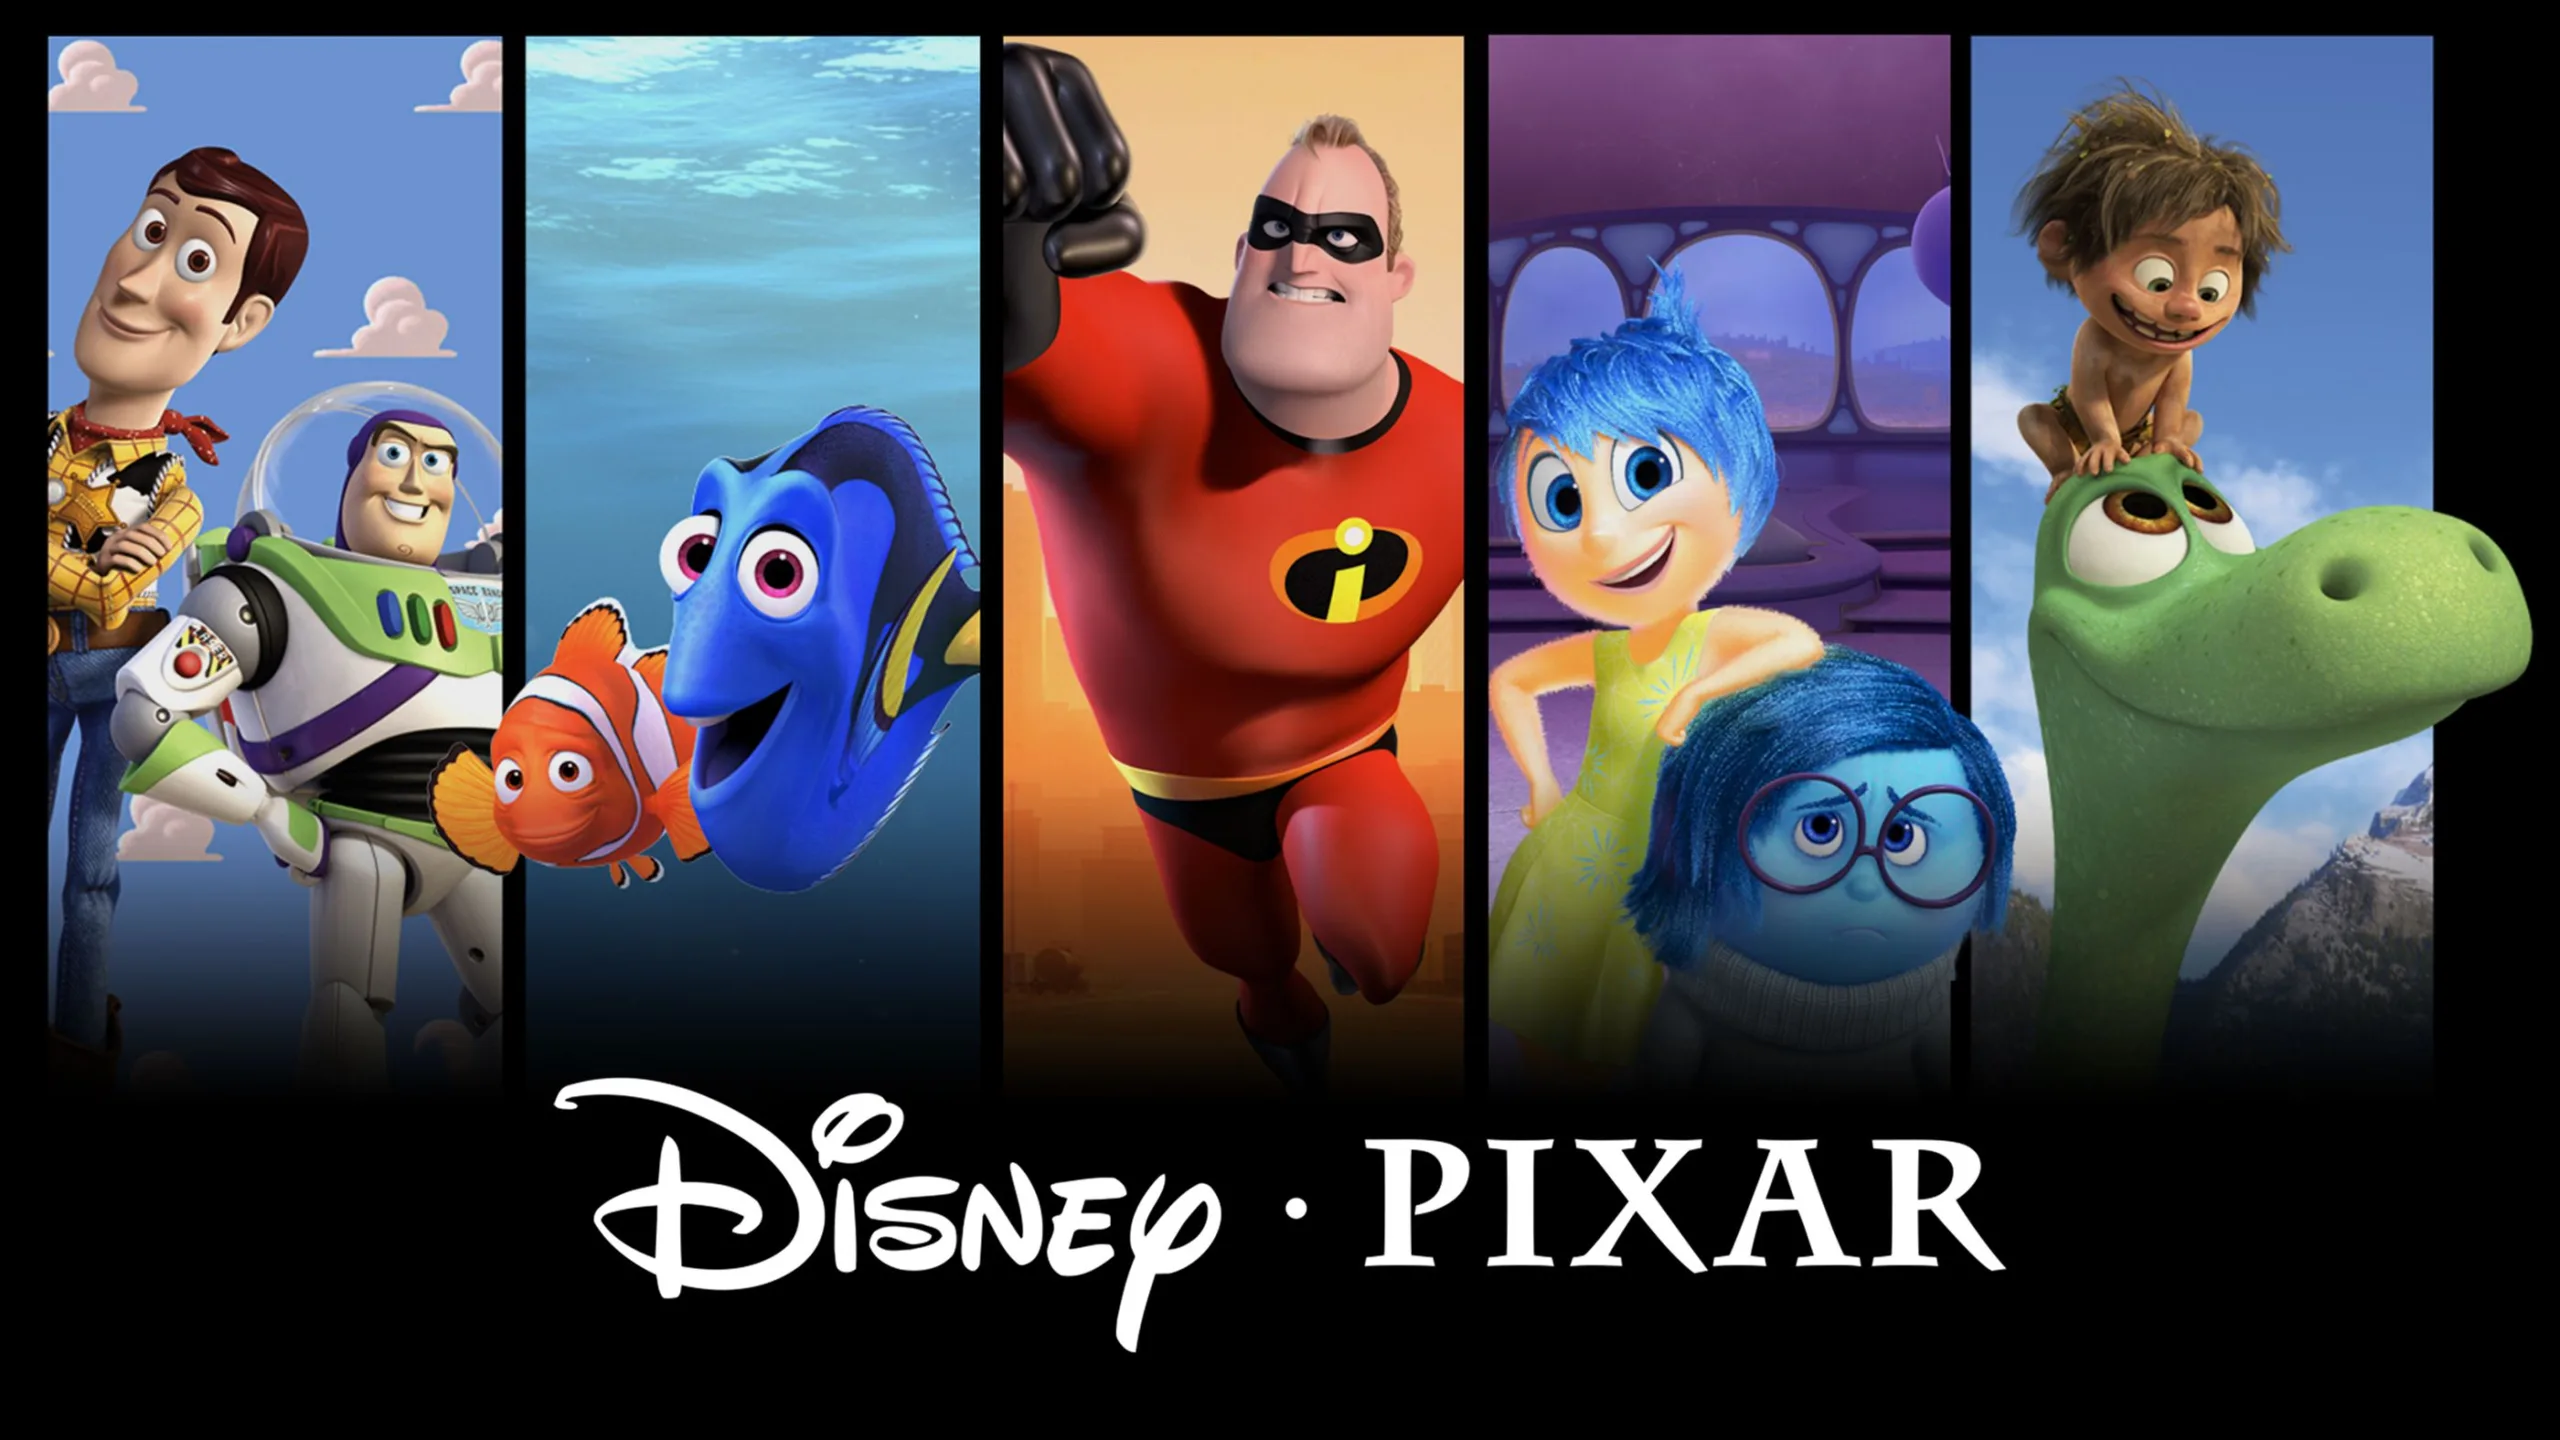 Disney Plus - Pixar